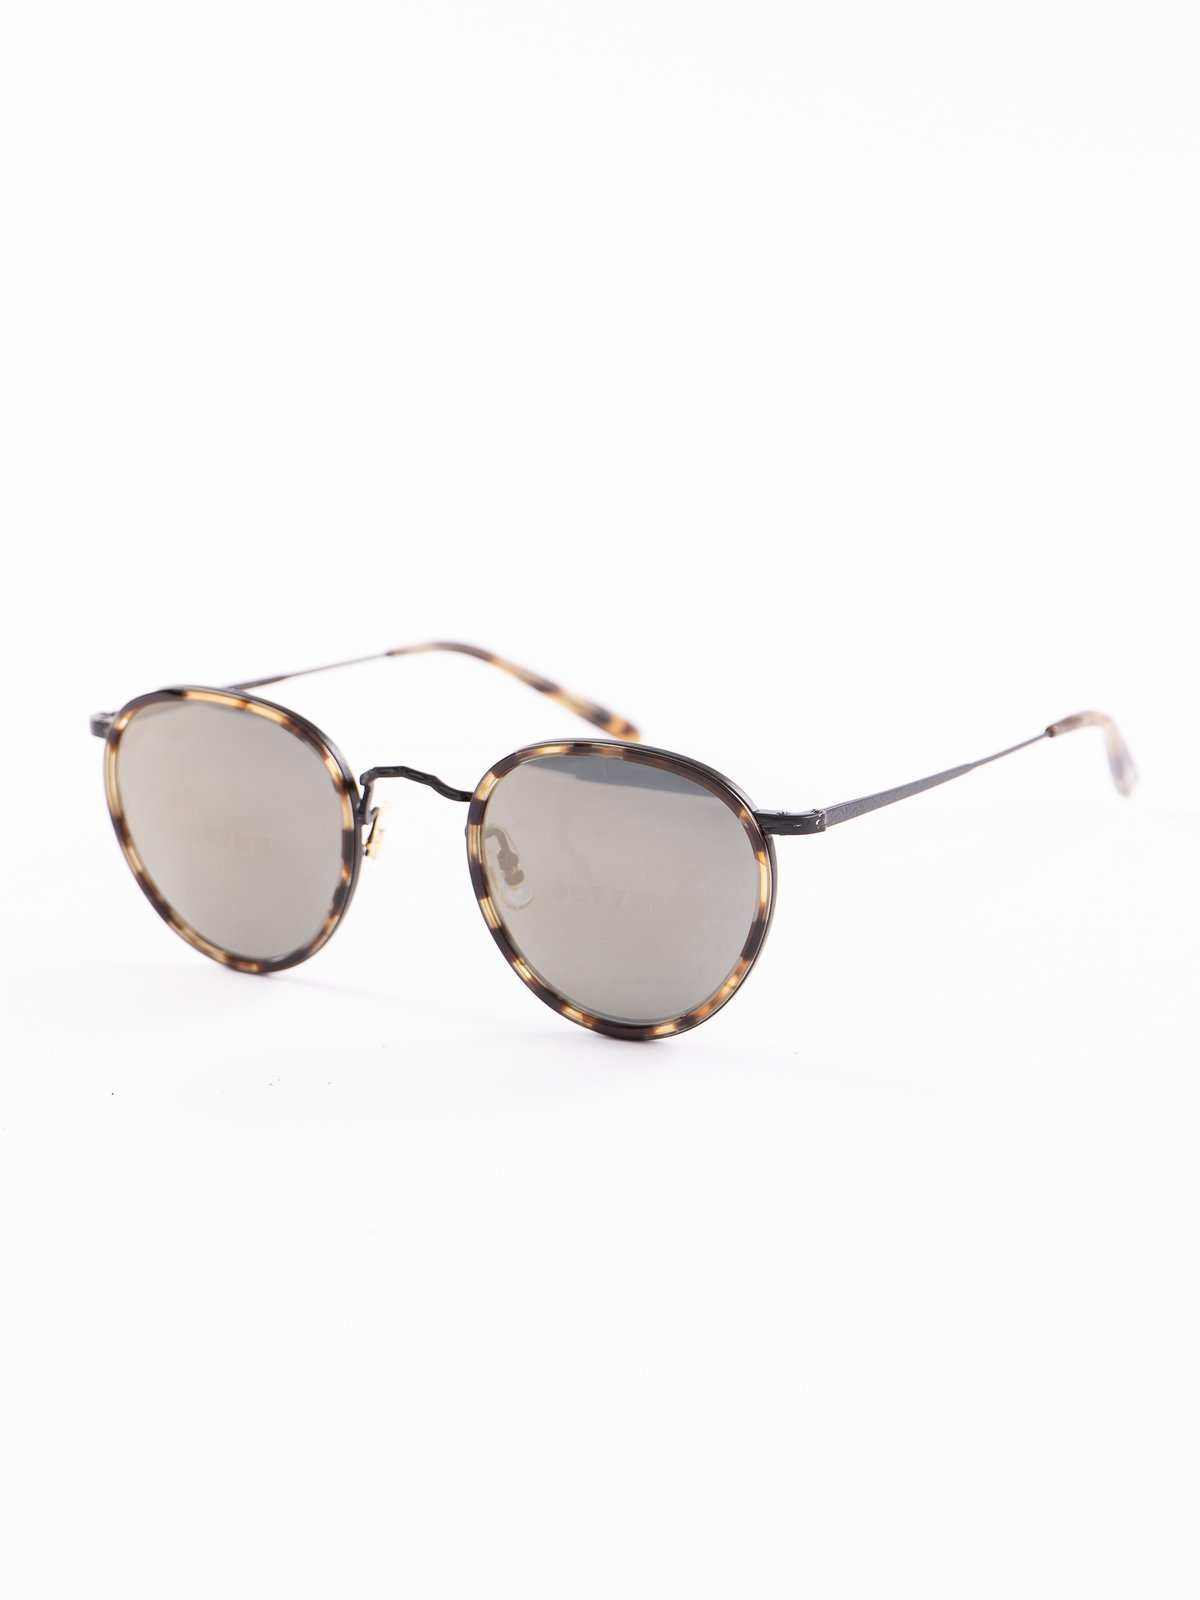 Hickory Tortoise–Matte Black/Dark Grey Mirror Gold MP–2 Sunglasses - Image 2